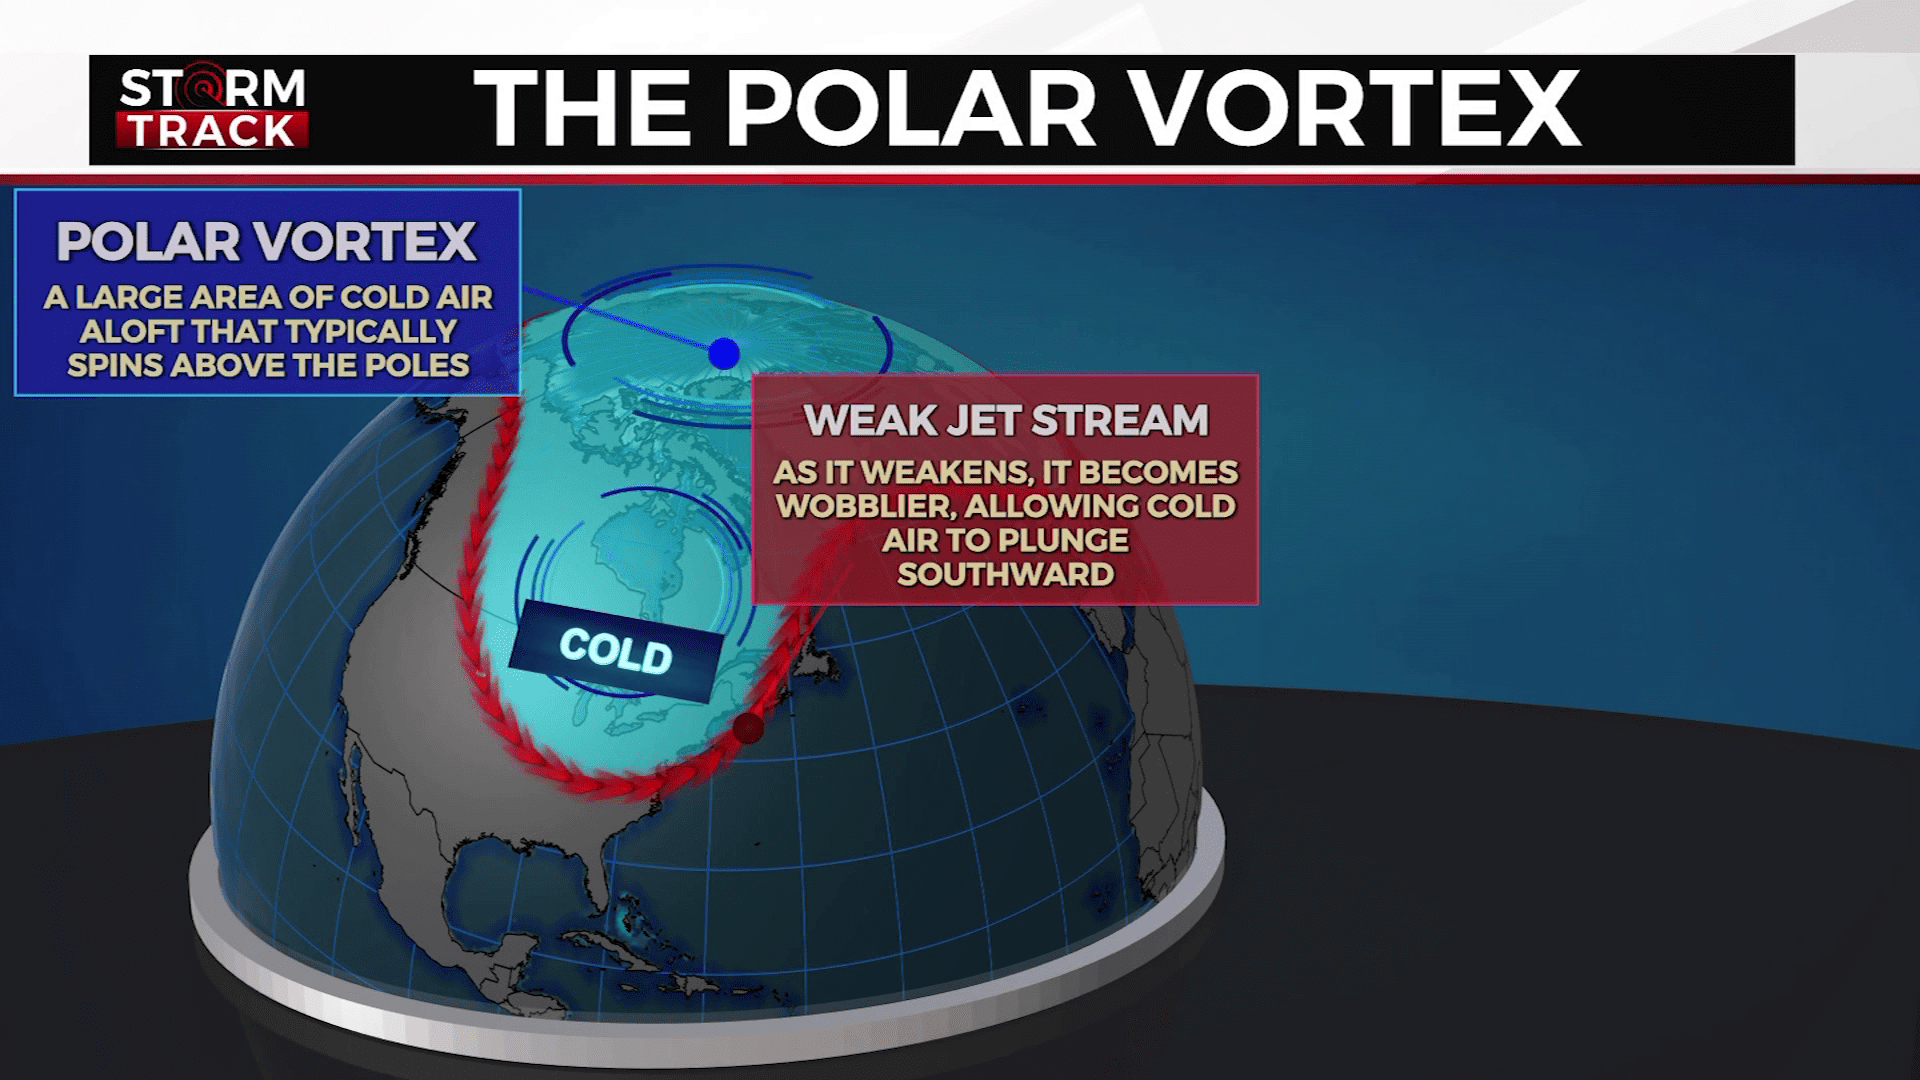 A graphic breaking down the polar vortex